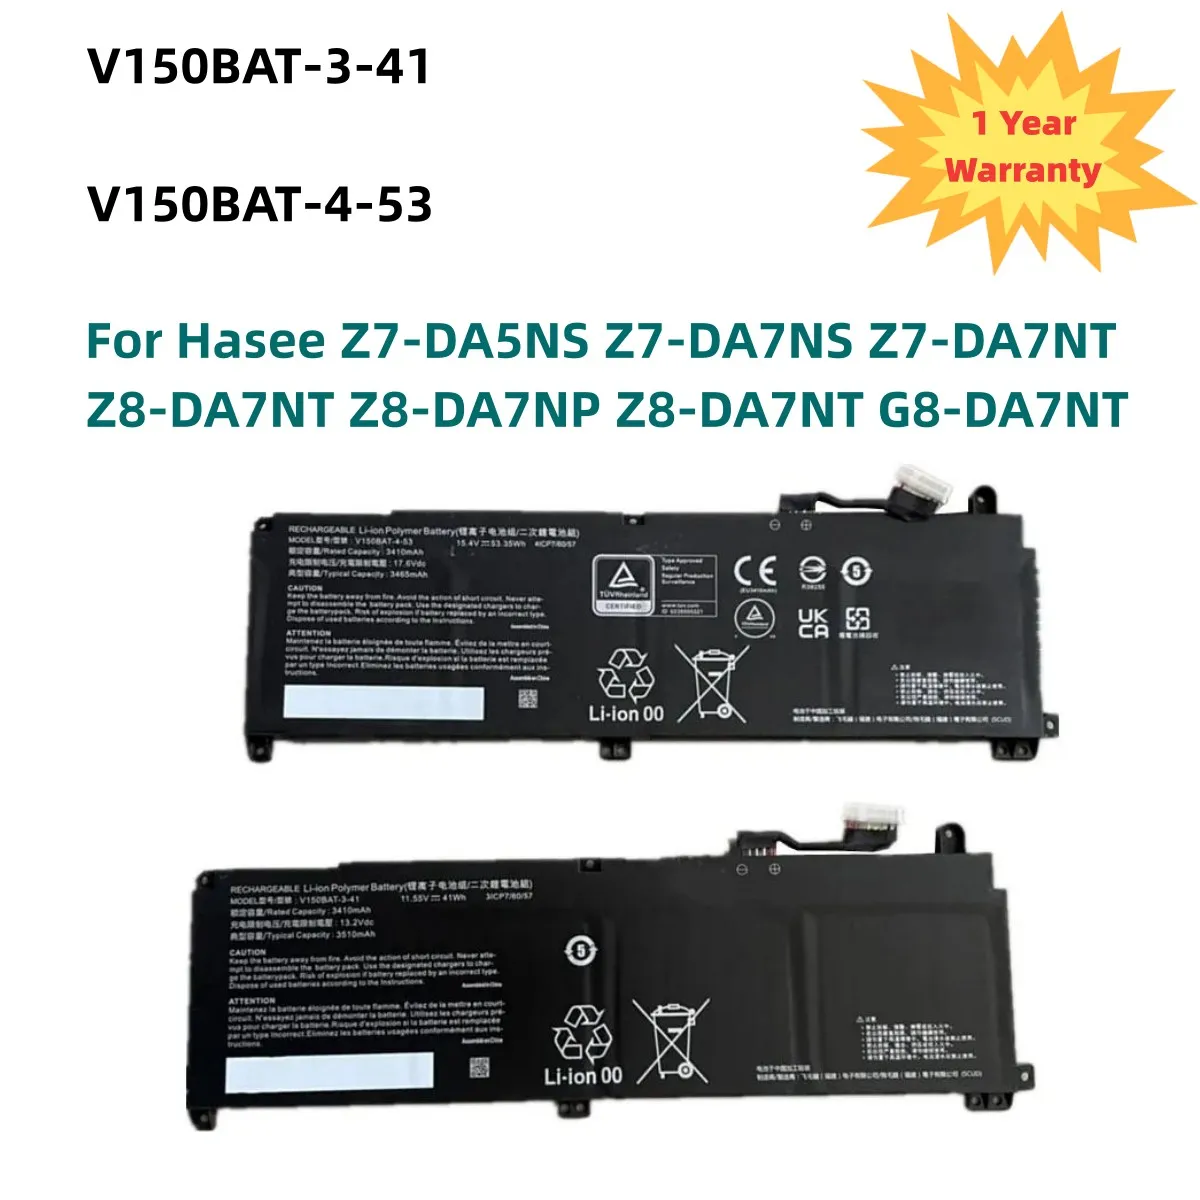 

V150BAT-4-53 V150BAT-3-41 Laptop Battery For Hasee Z7-DA5NS Z7-DA7NS Z7-DA7NT Z8-DA7NT Z8-DA7NP Z8-DA7NT G8-DA7NT